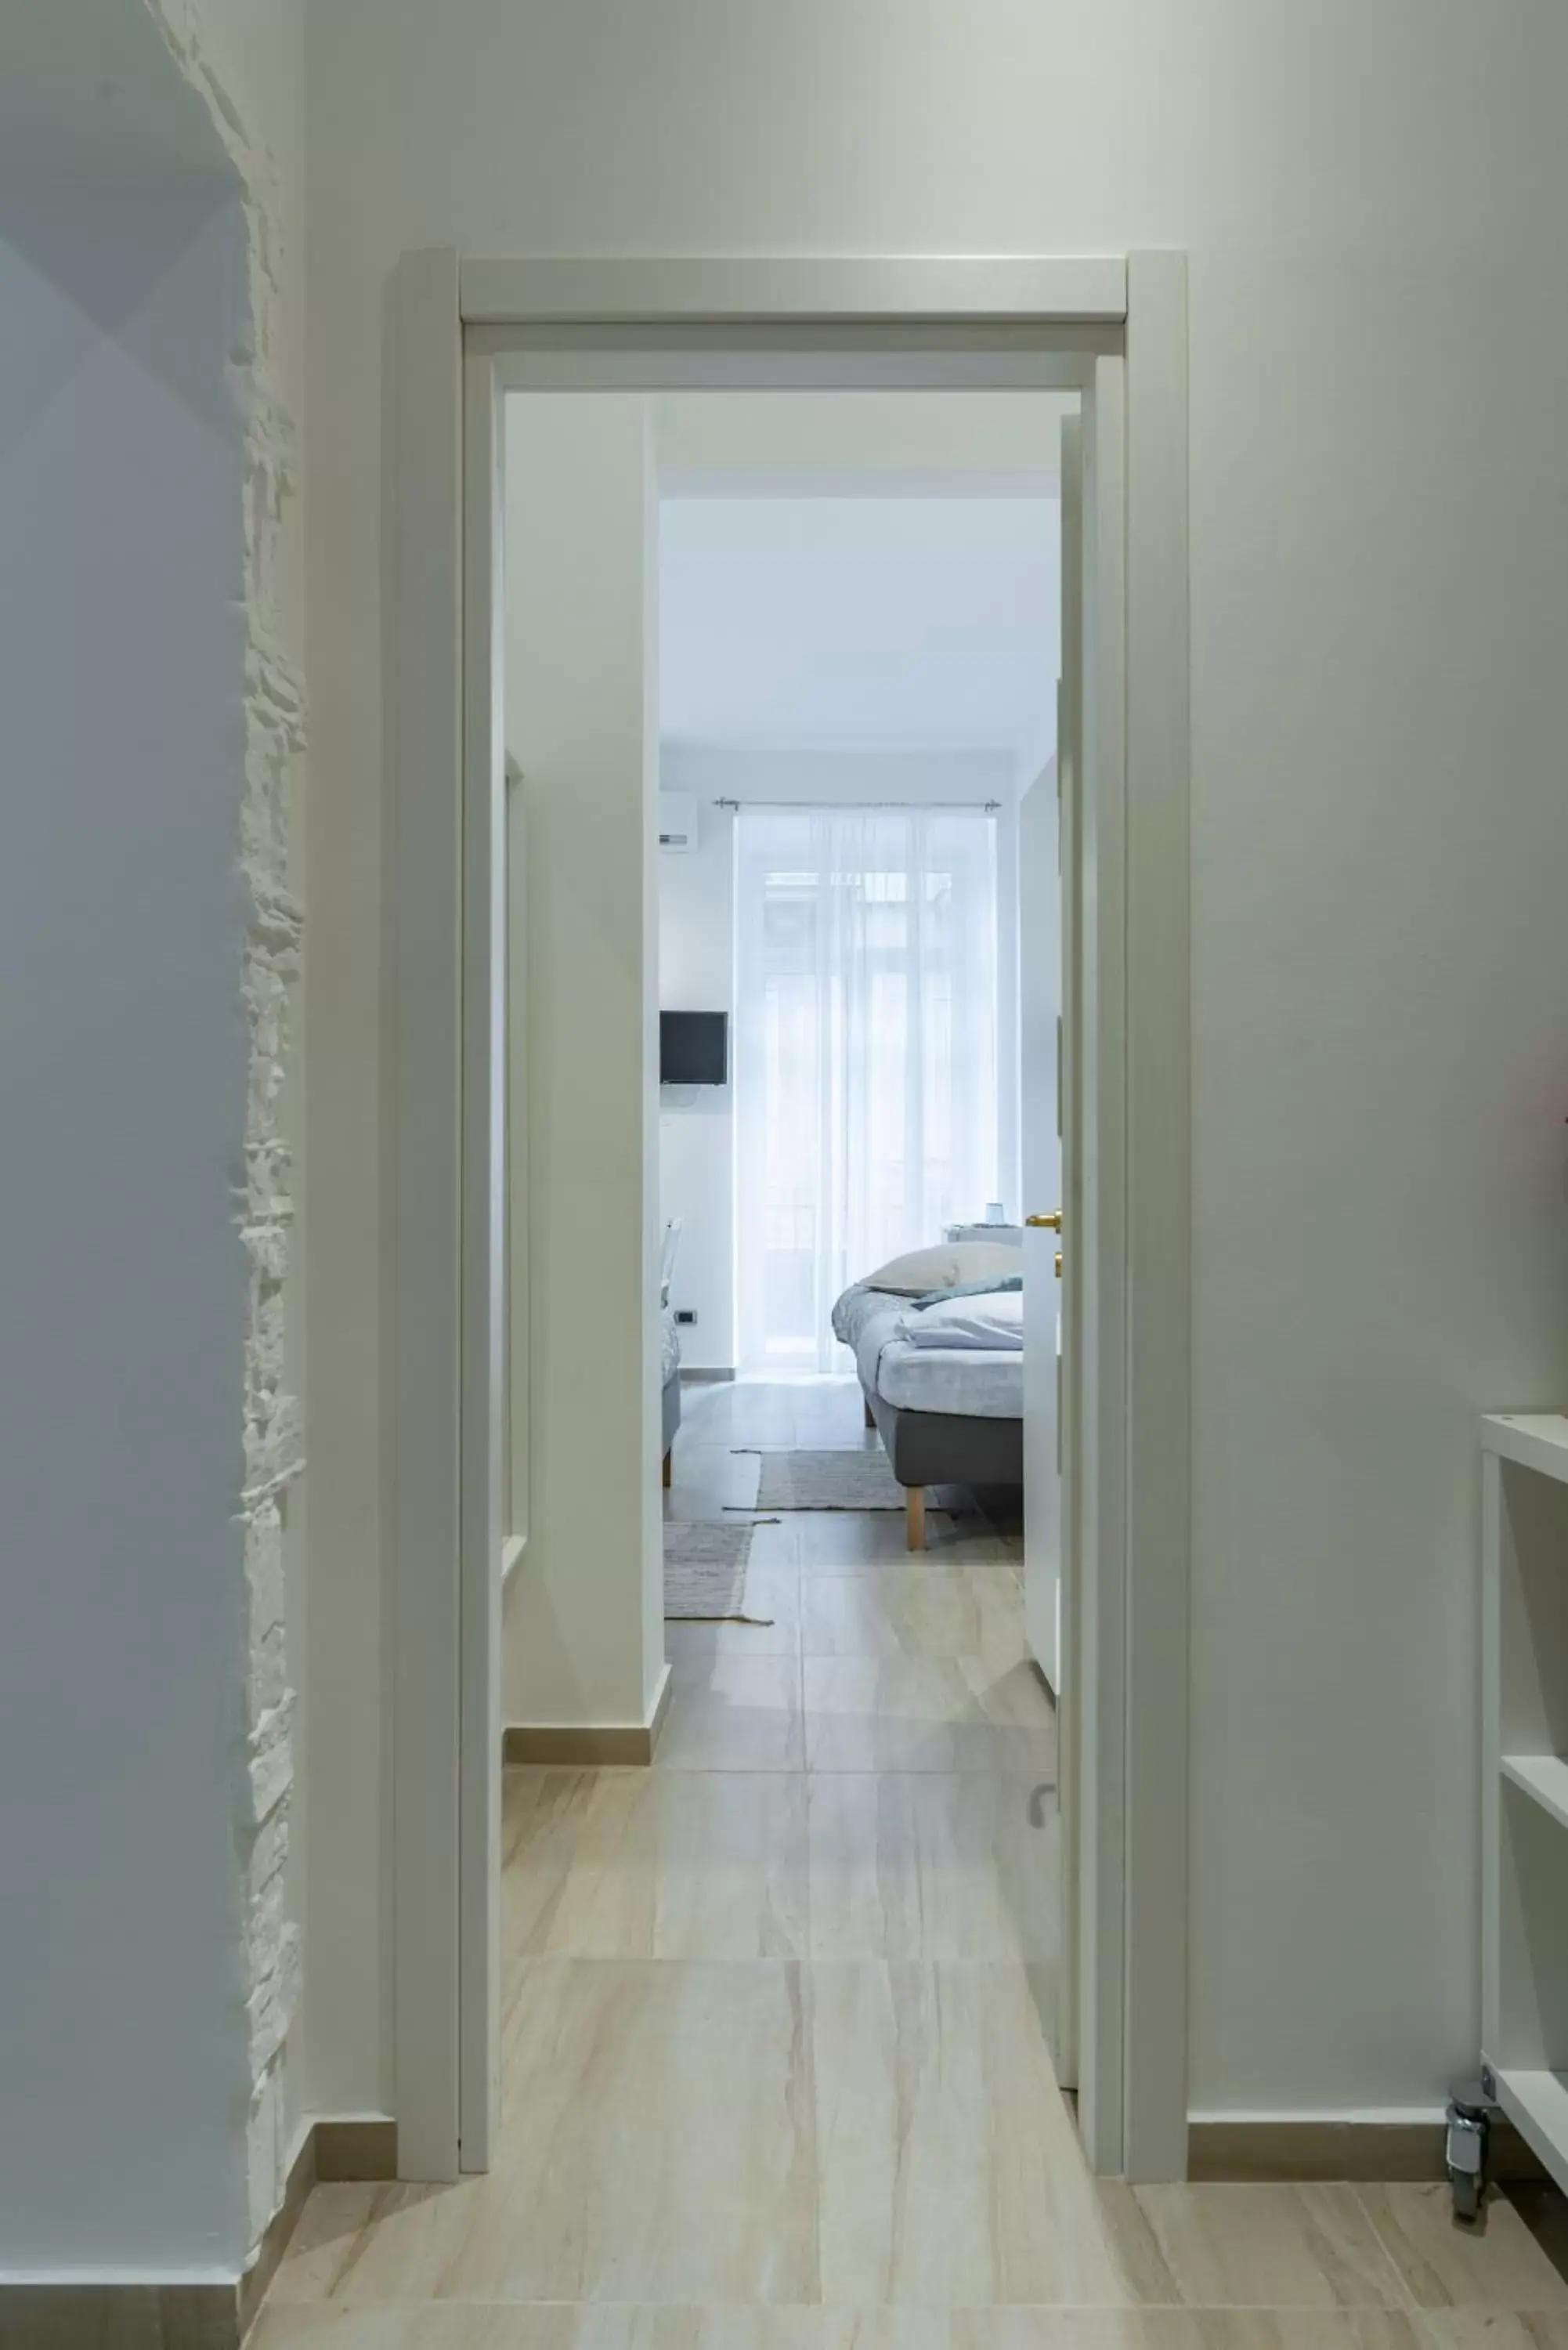 Photo of the whole room, Bathroom in Bed & Breakfast "Il Priscio"